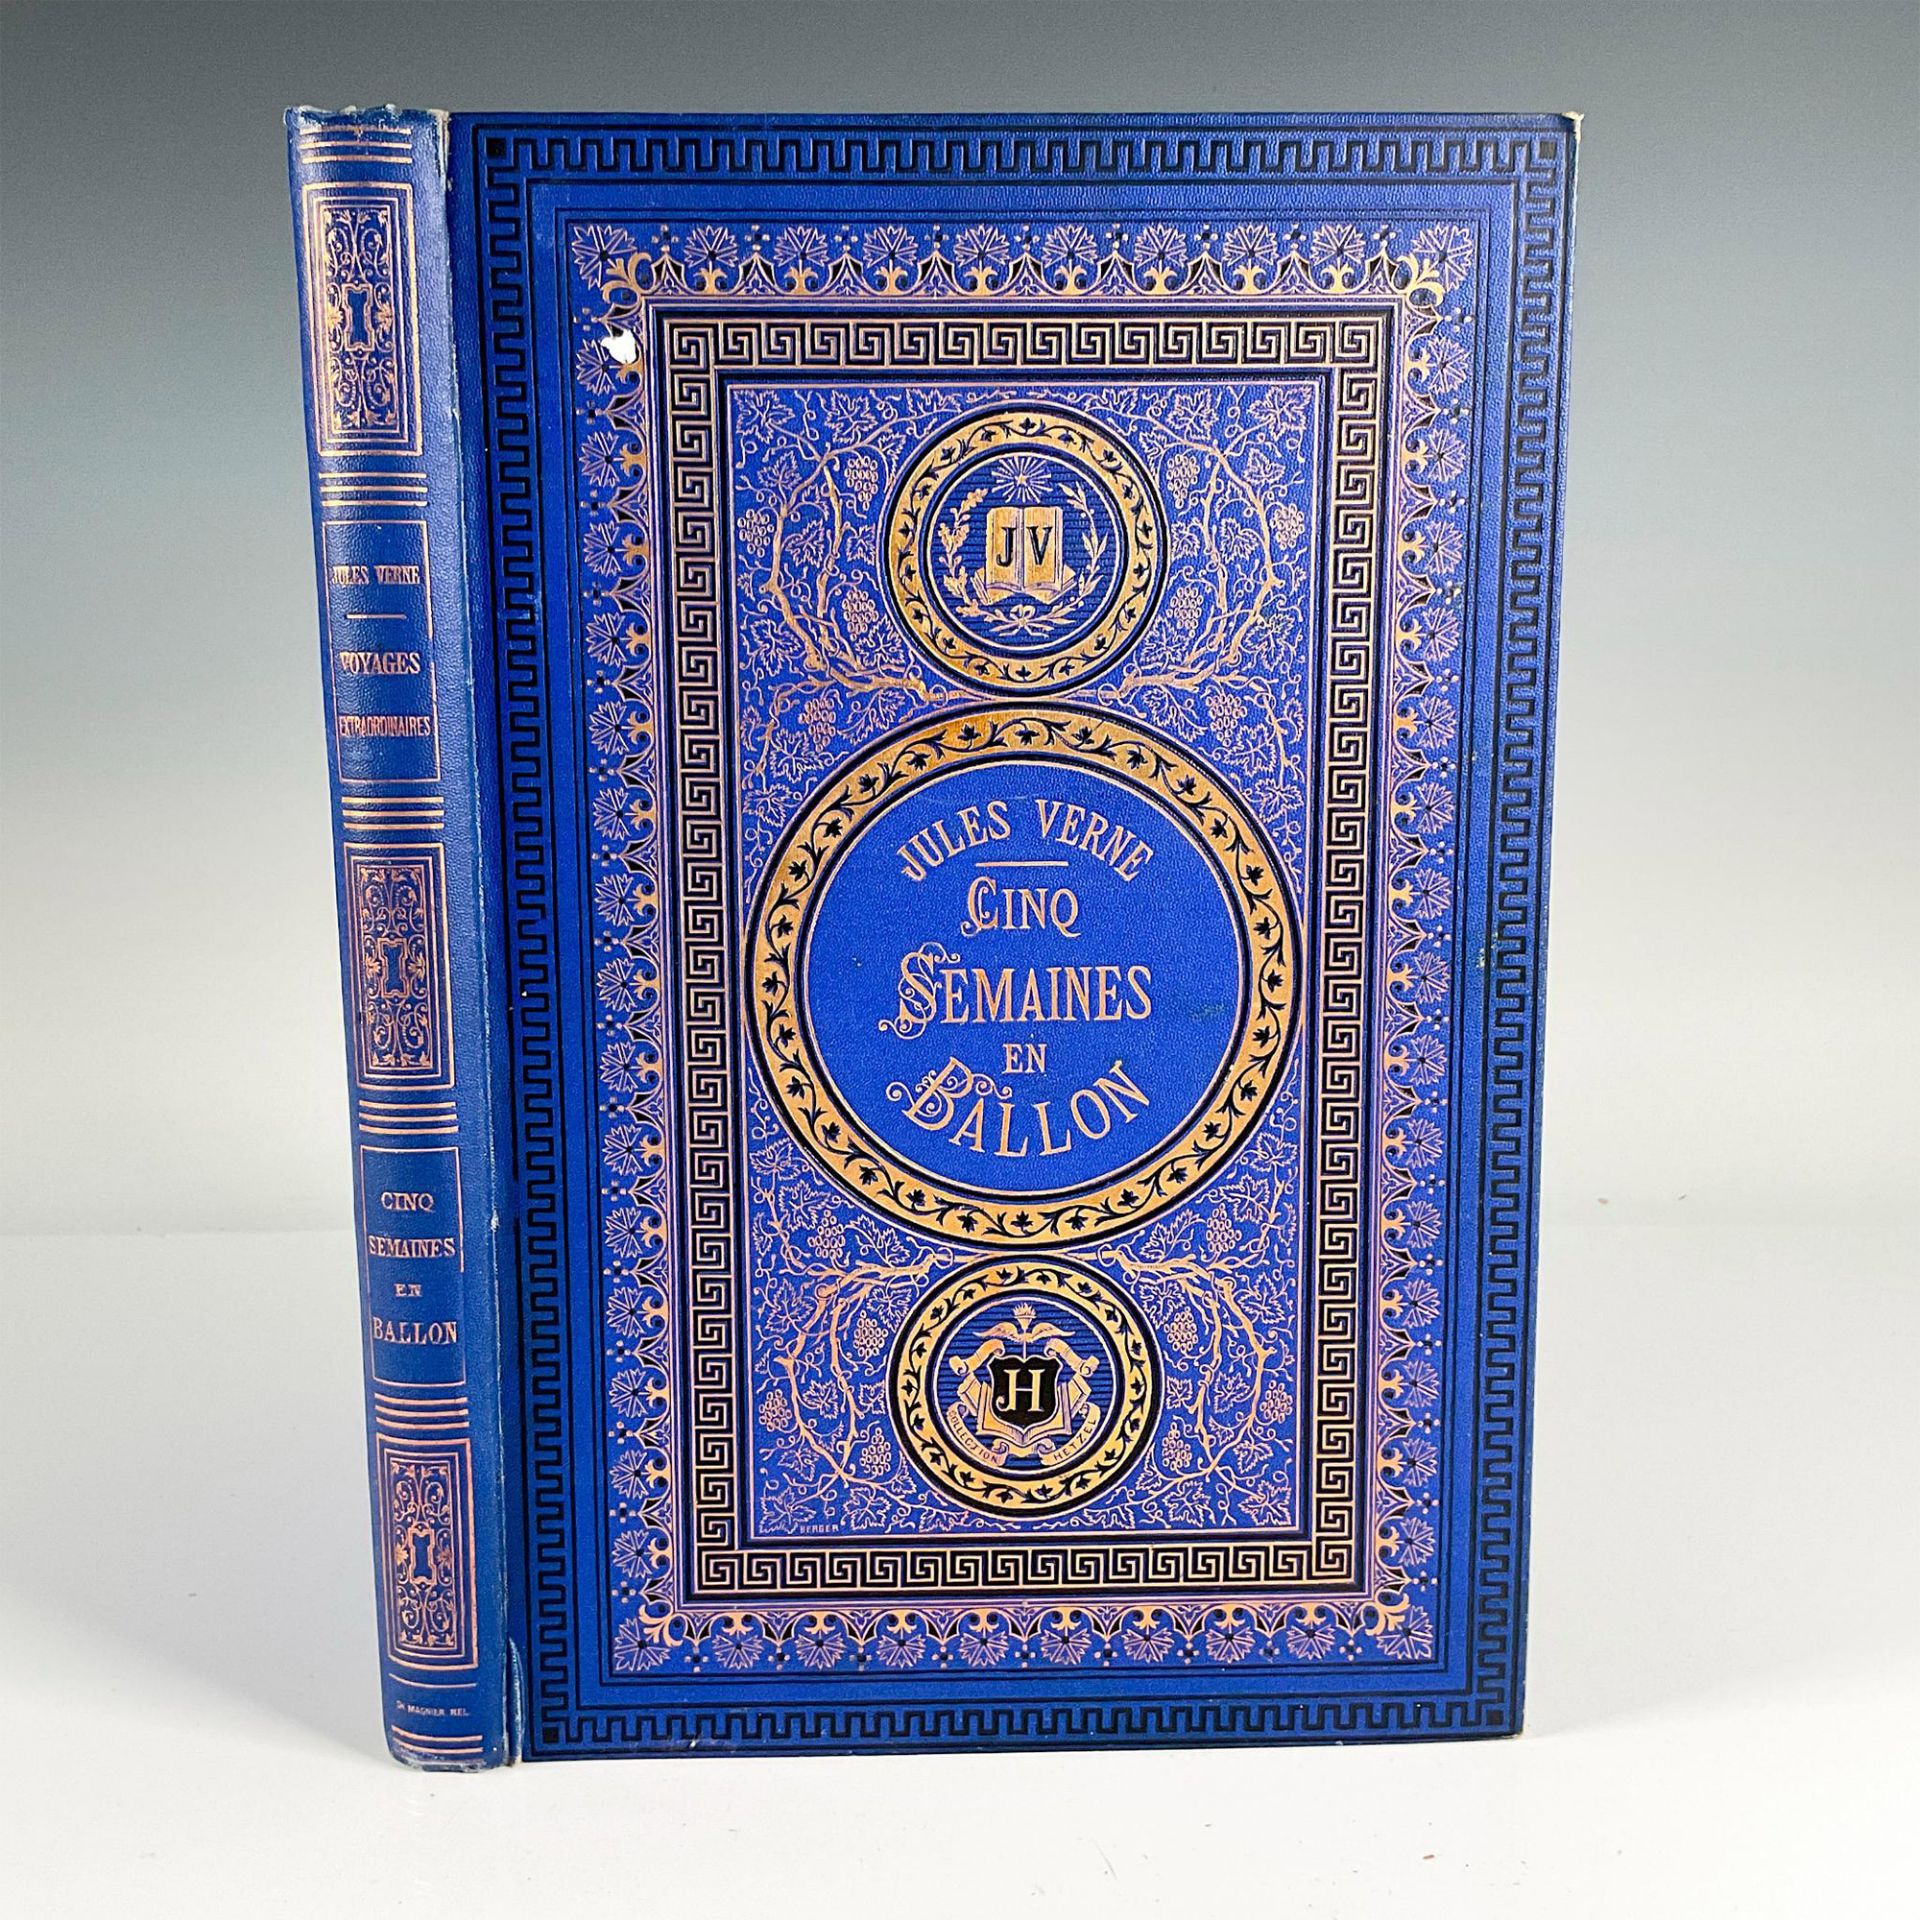 Jules Verne, Cinq Semaines en Ballon, Initiales Dorees, Blue